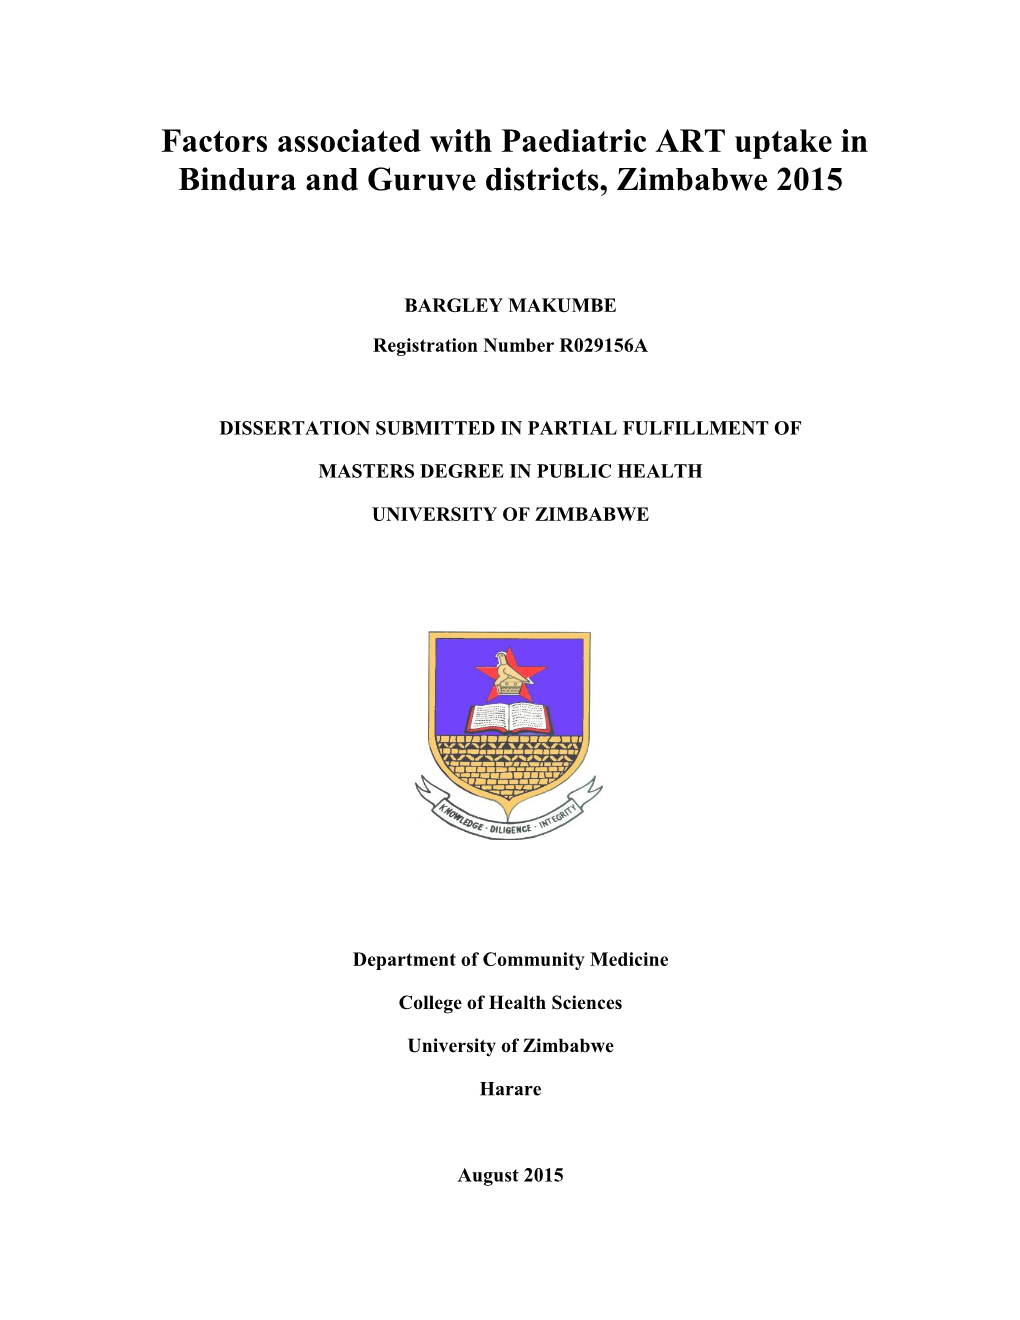 Factors Associated with Paediatric ART Uptake in Bindura and Guruve Districts, Zimbabwe 2015